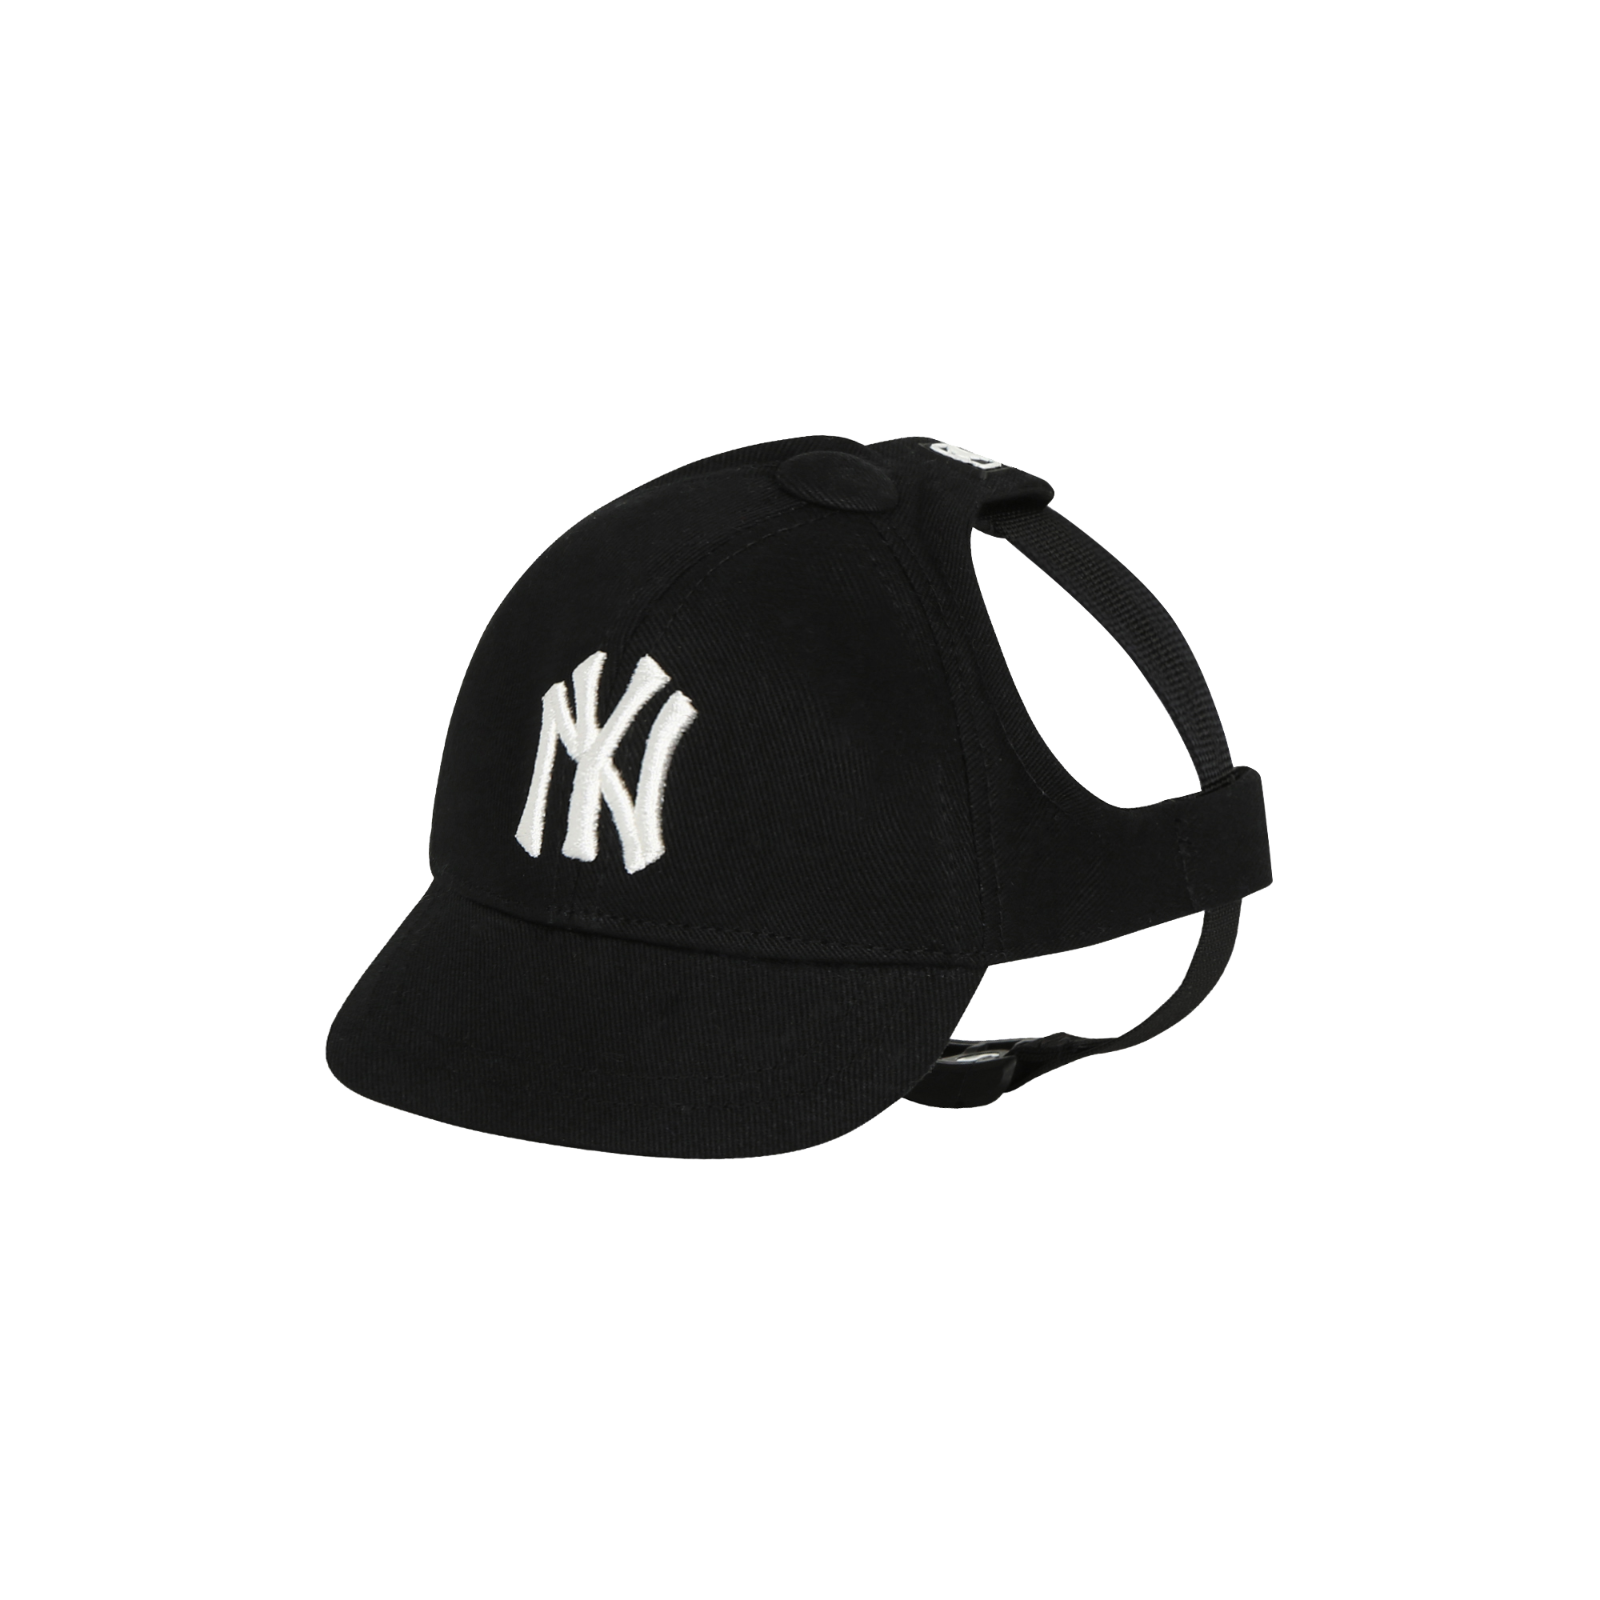 Yankees Hat PNG Images, Transparent Yankees Hat Image Download - PNGitem